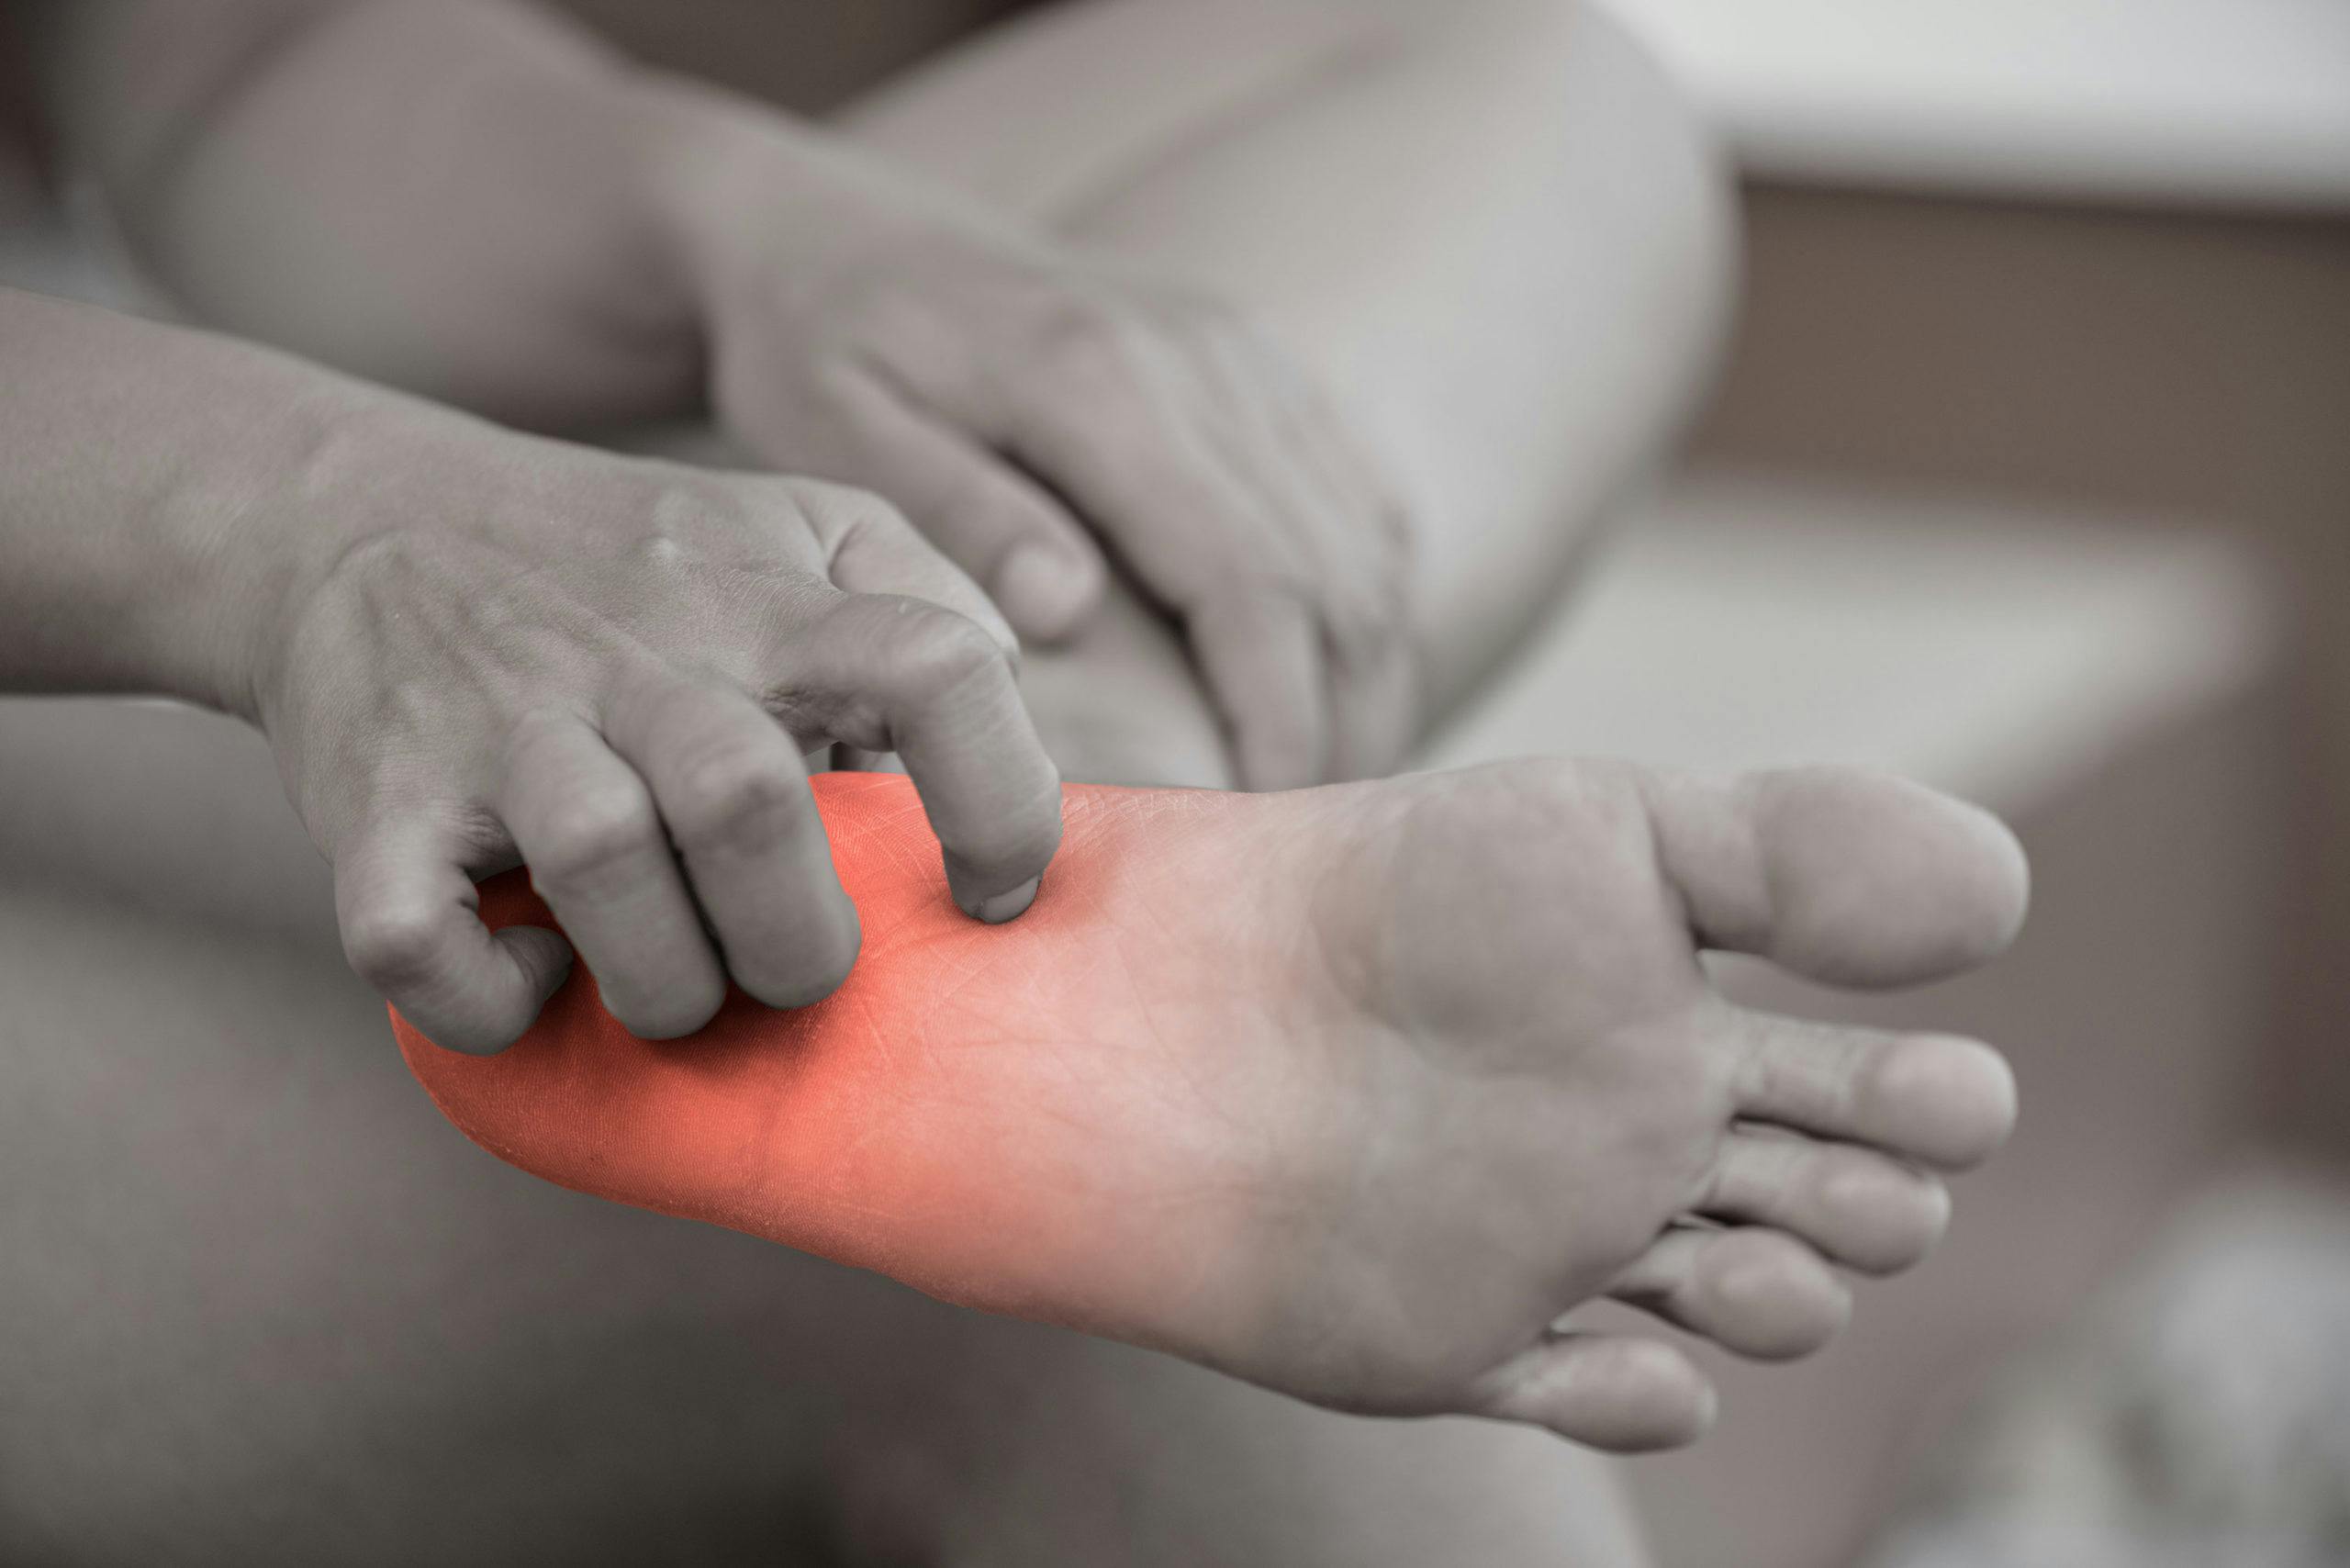 Case Study - Treatment Of Heel Pain Due To Plantar Fasciitis